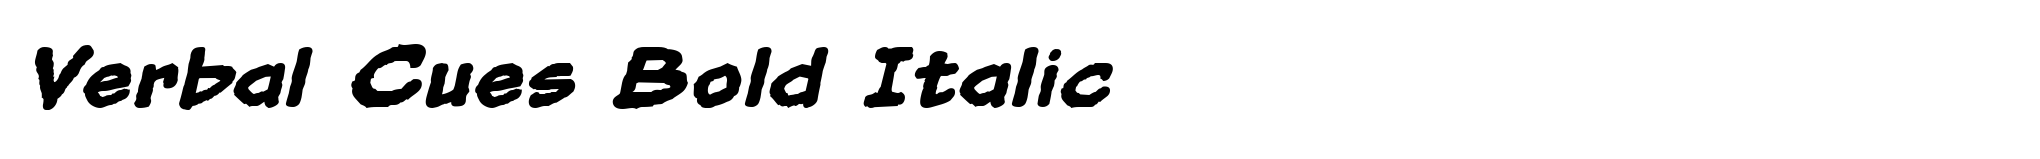 Verbal Cues Bold Italic image